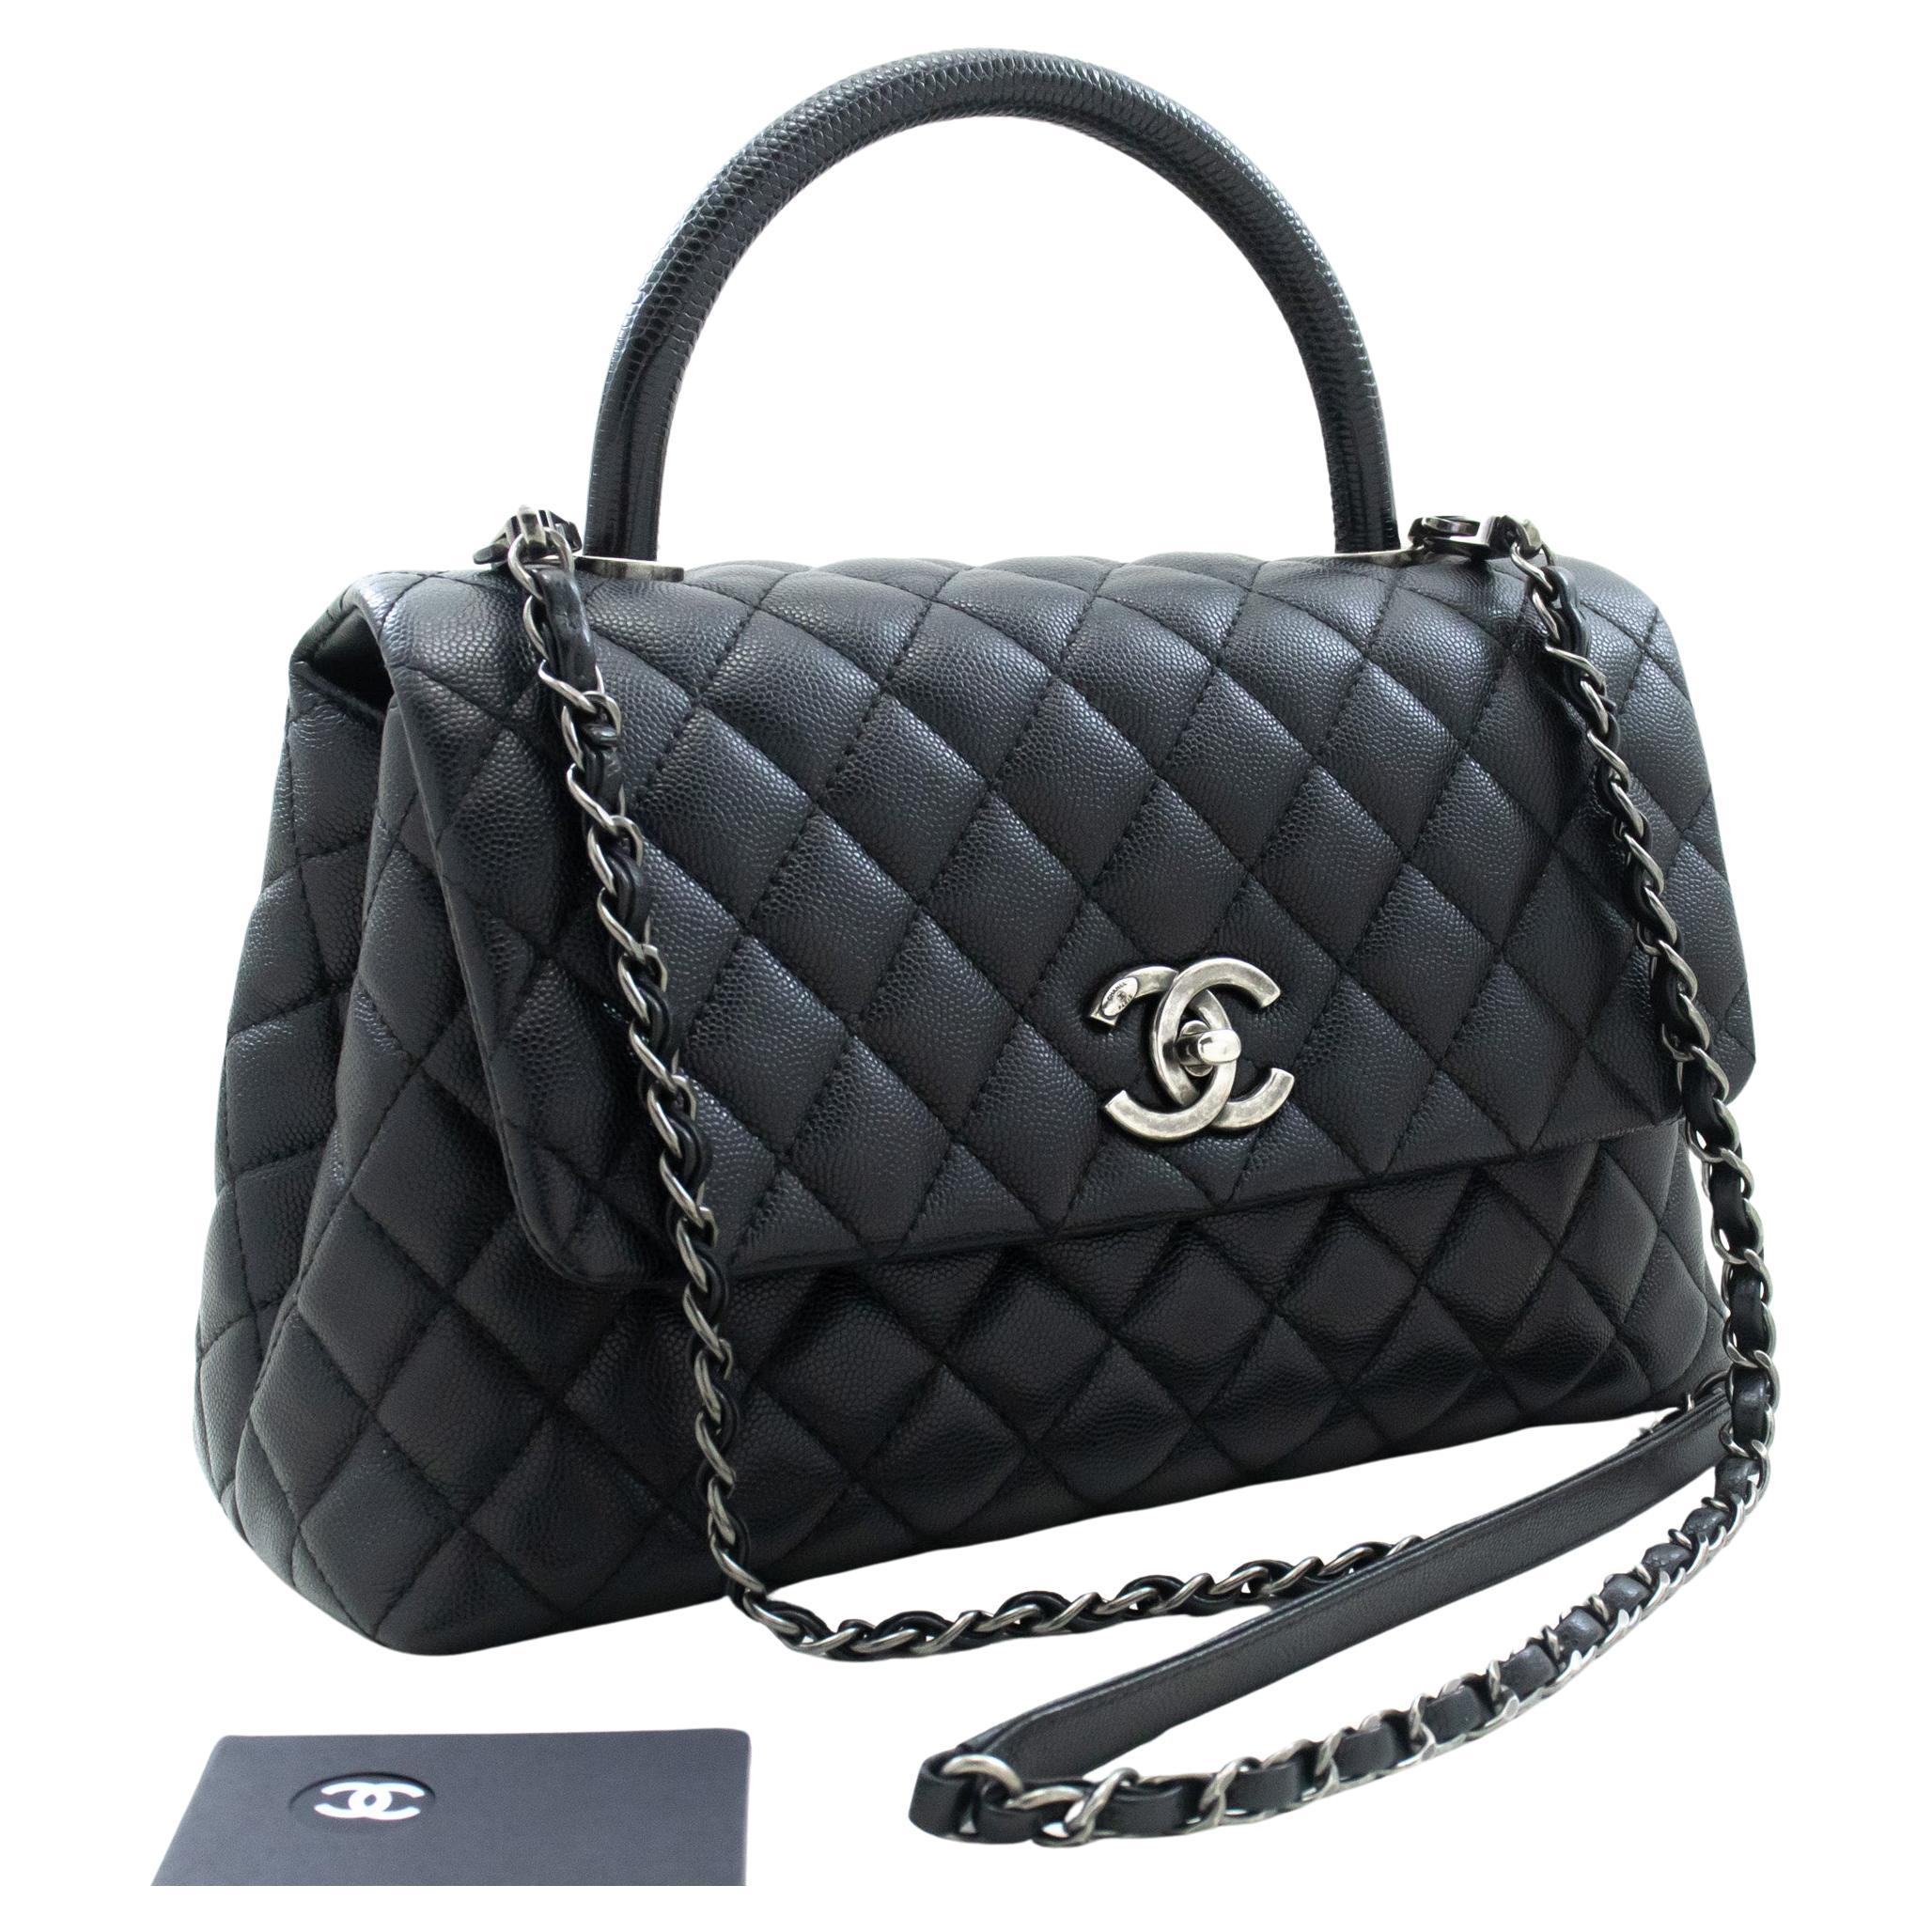 CHANEL 2 Way Top Handle Shoulder Bag Handbag Black Caviar Leather For Sale